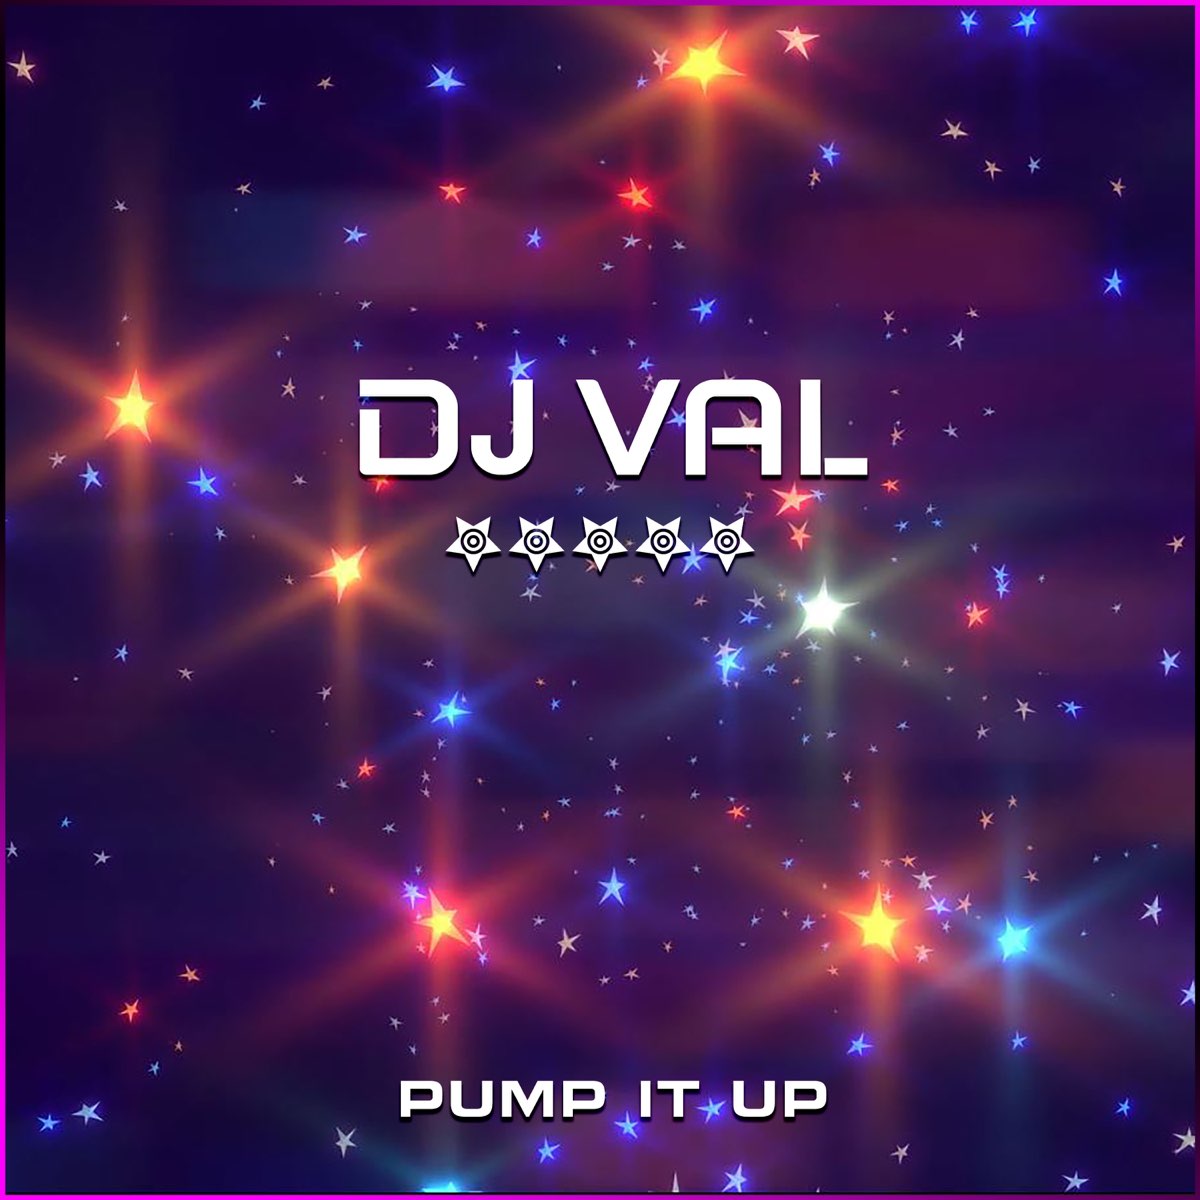 DJ Val. О исполнителе DJ Val. DJ Val - once again. DJ Val песни. Dj val лучшие песни